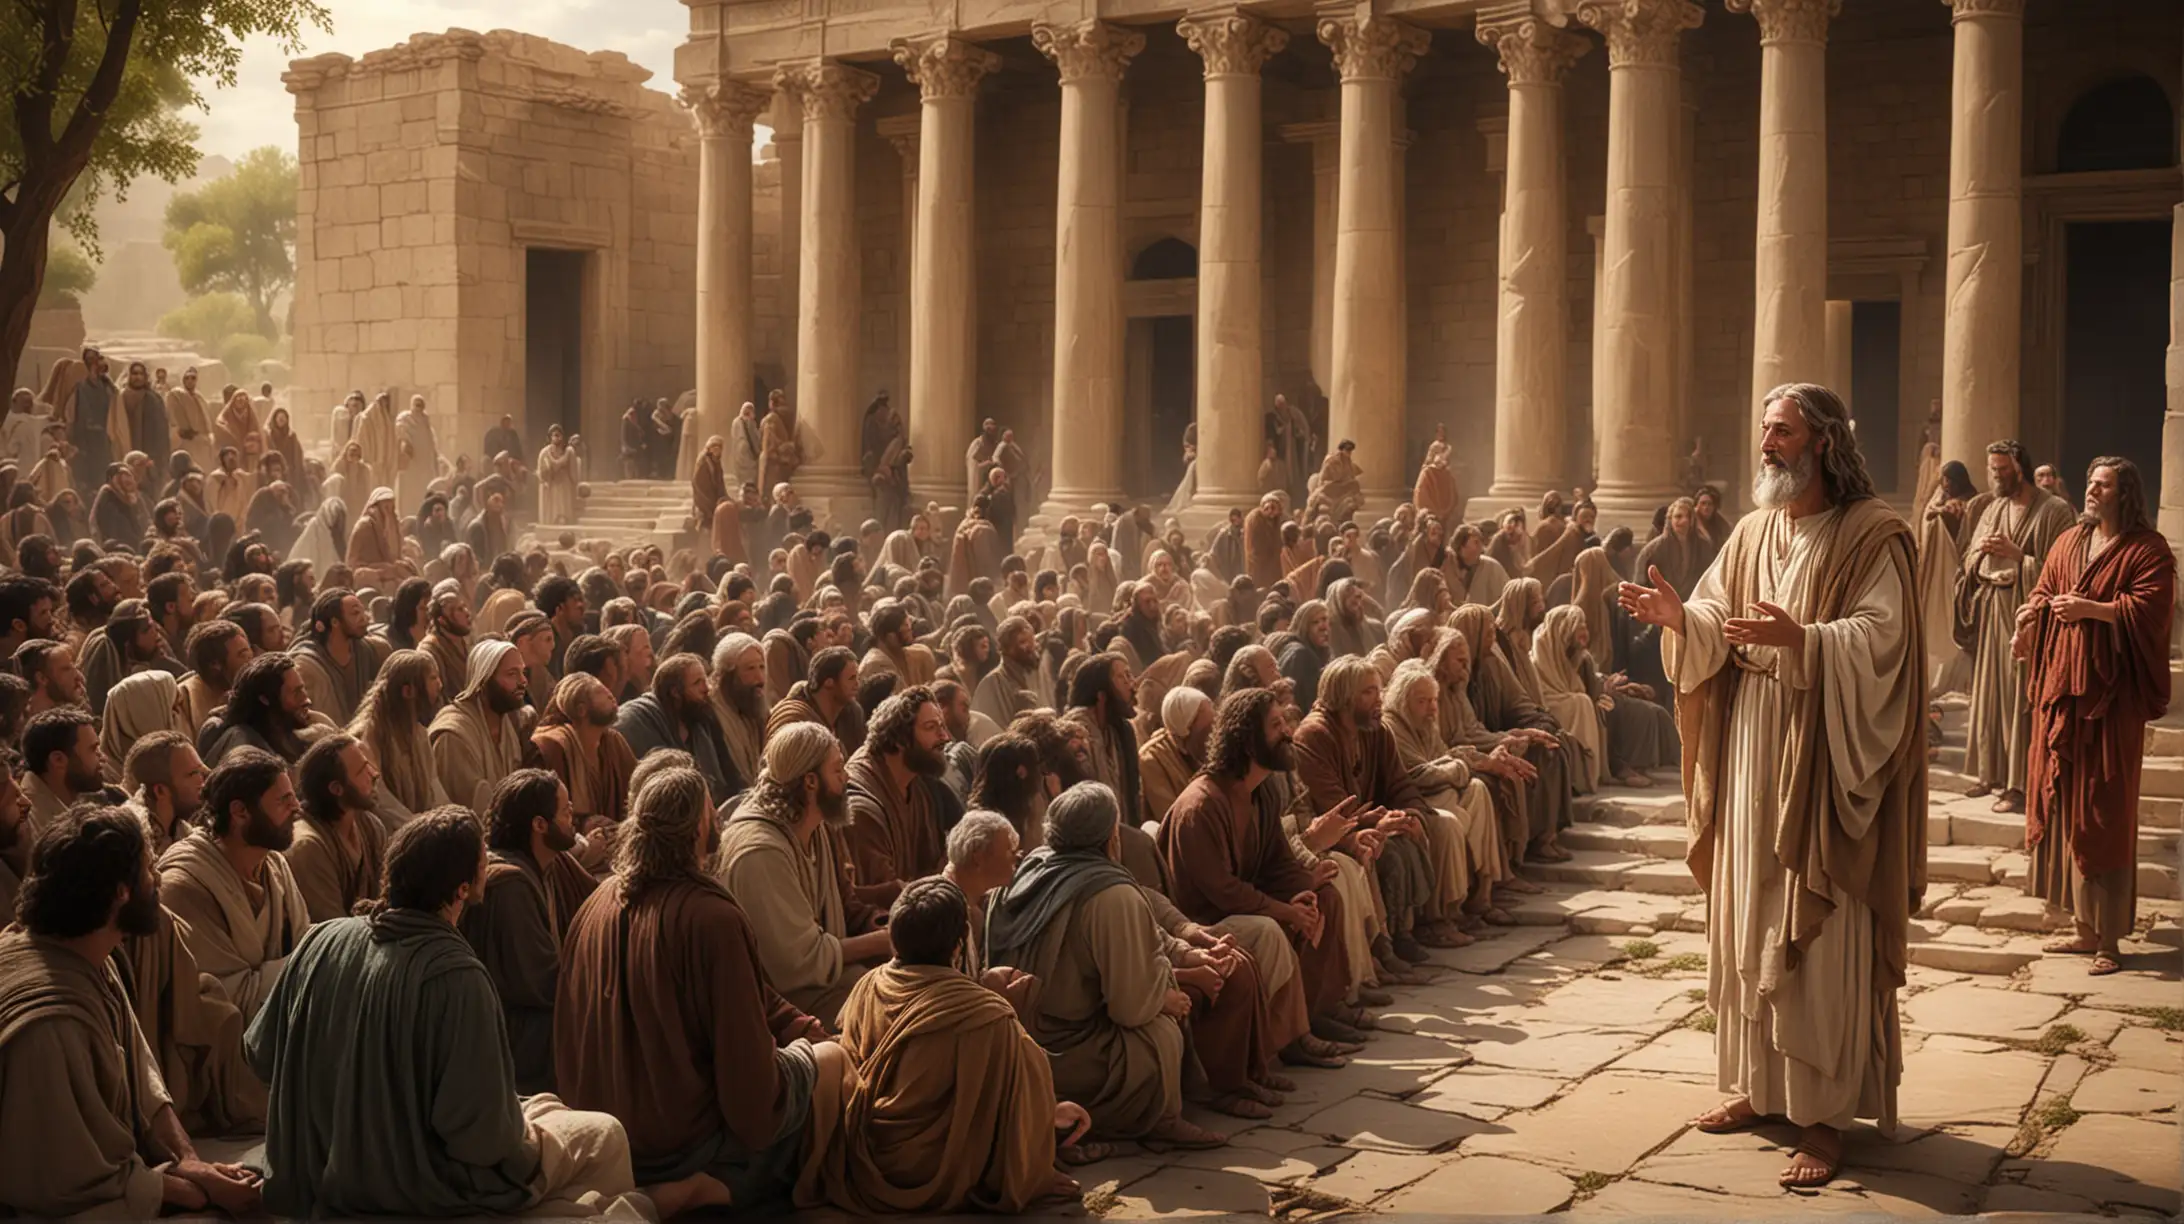 the Biblical Prophet Isaiah talking to a group of people in a temple scenario, during the era Biblical era of Elijah.